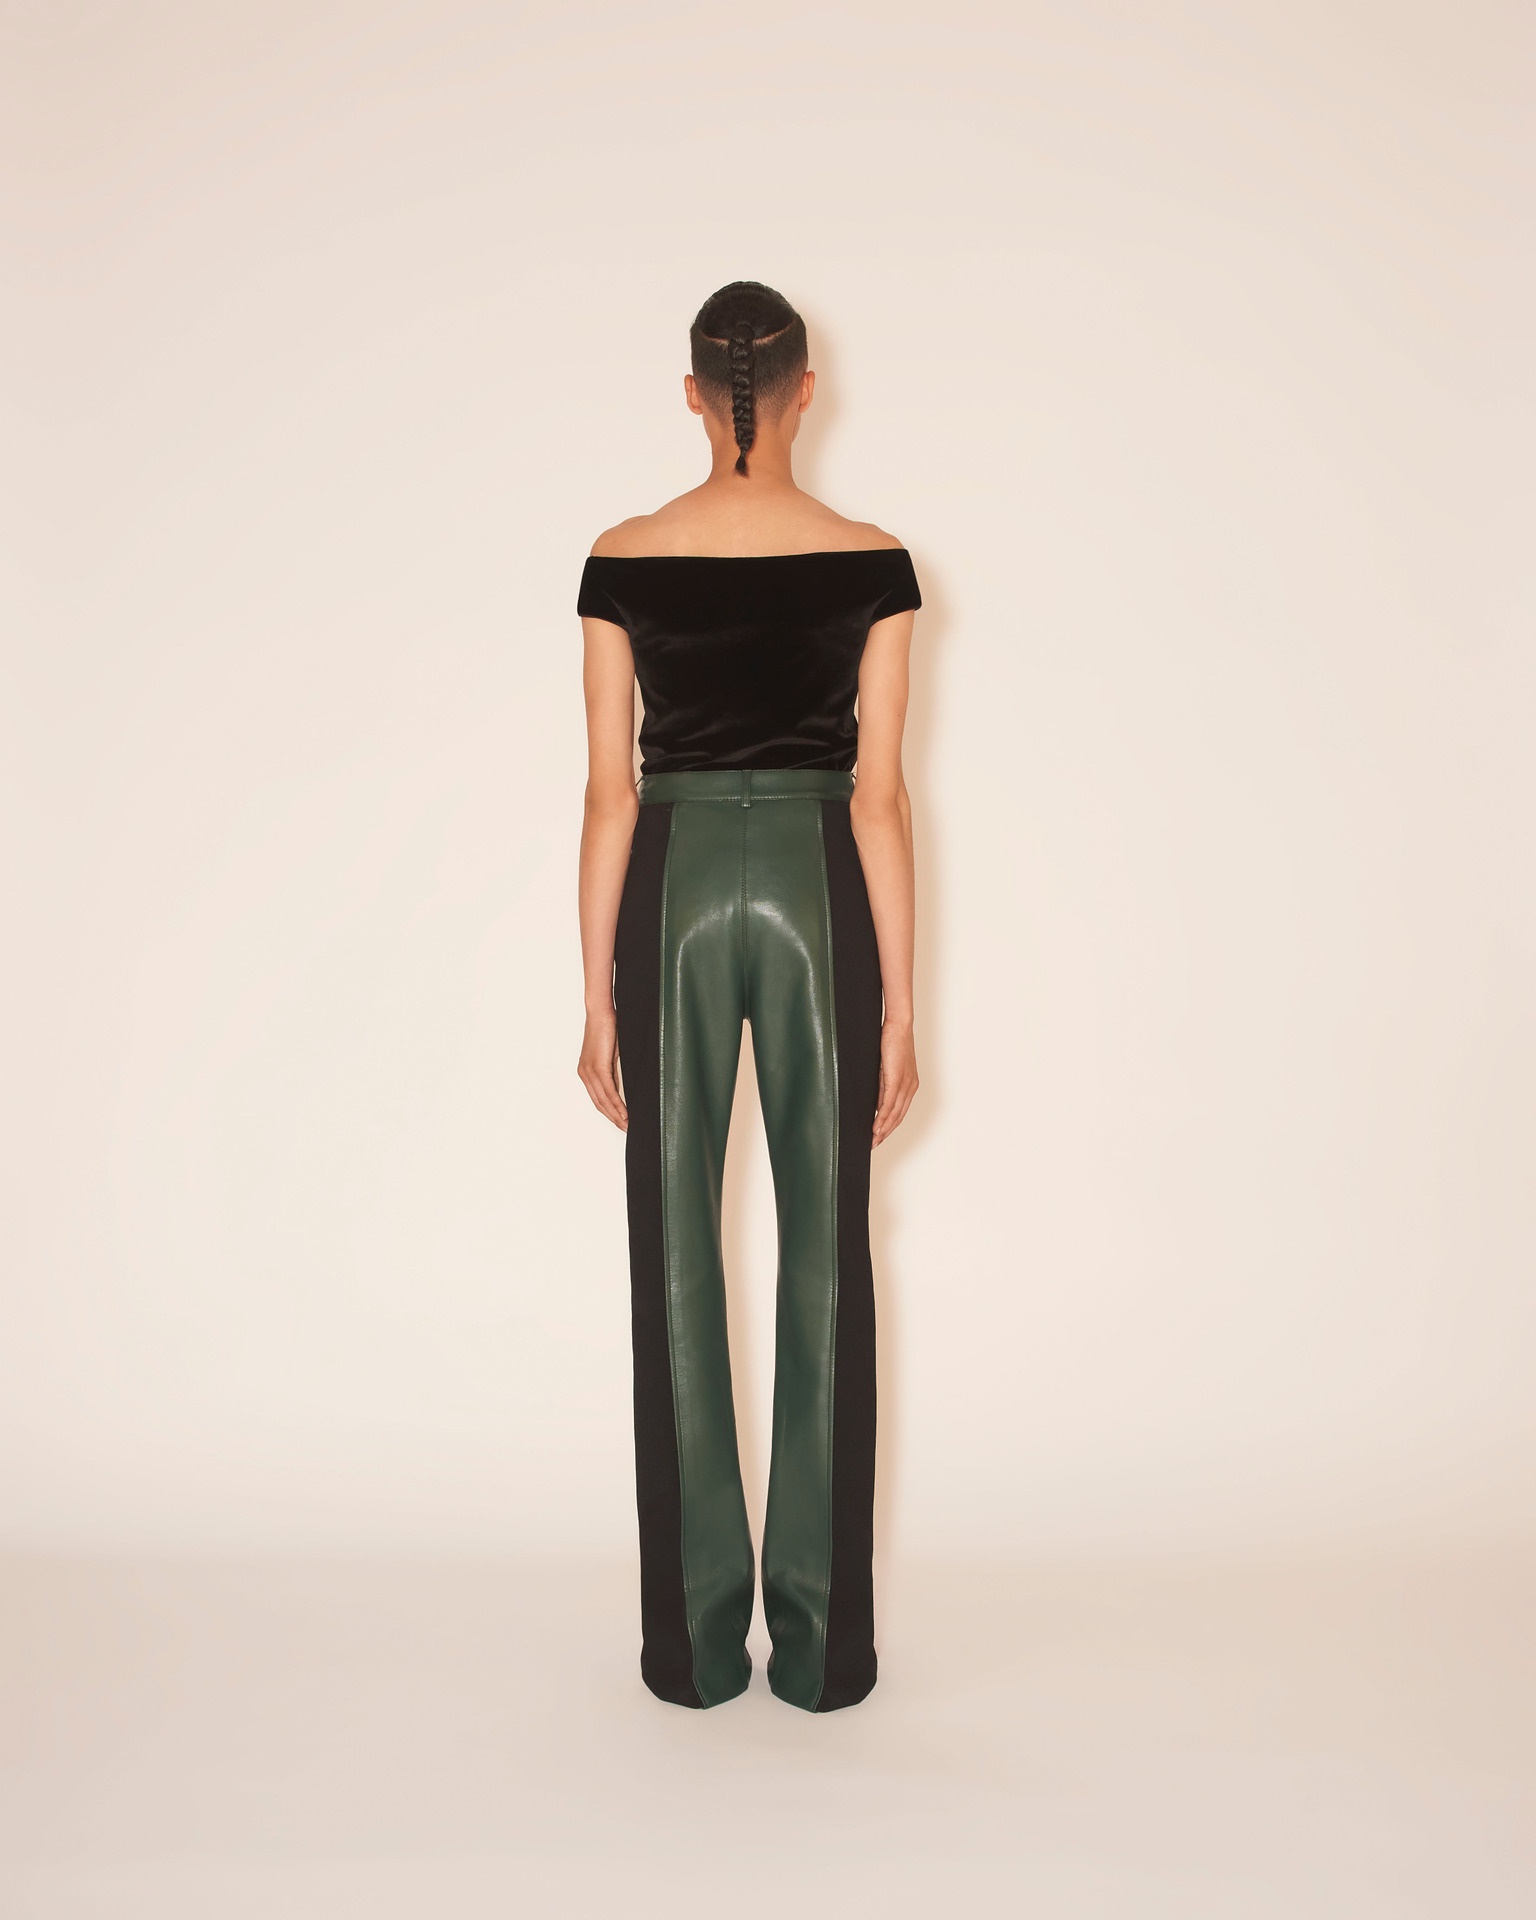 FILO - Contrast trouser - Pine green/black - 4